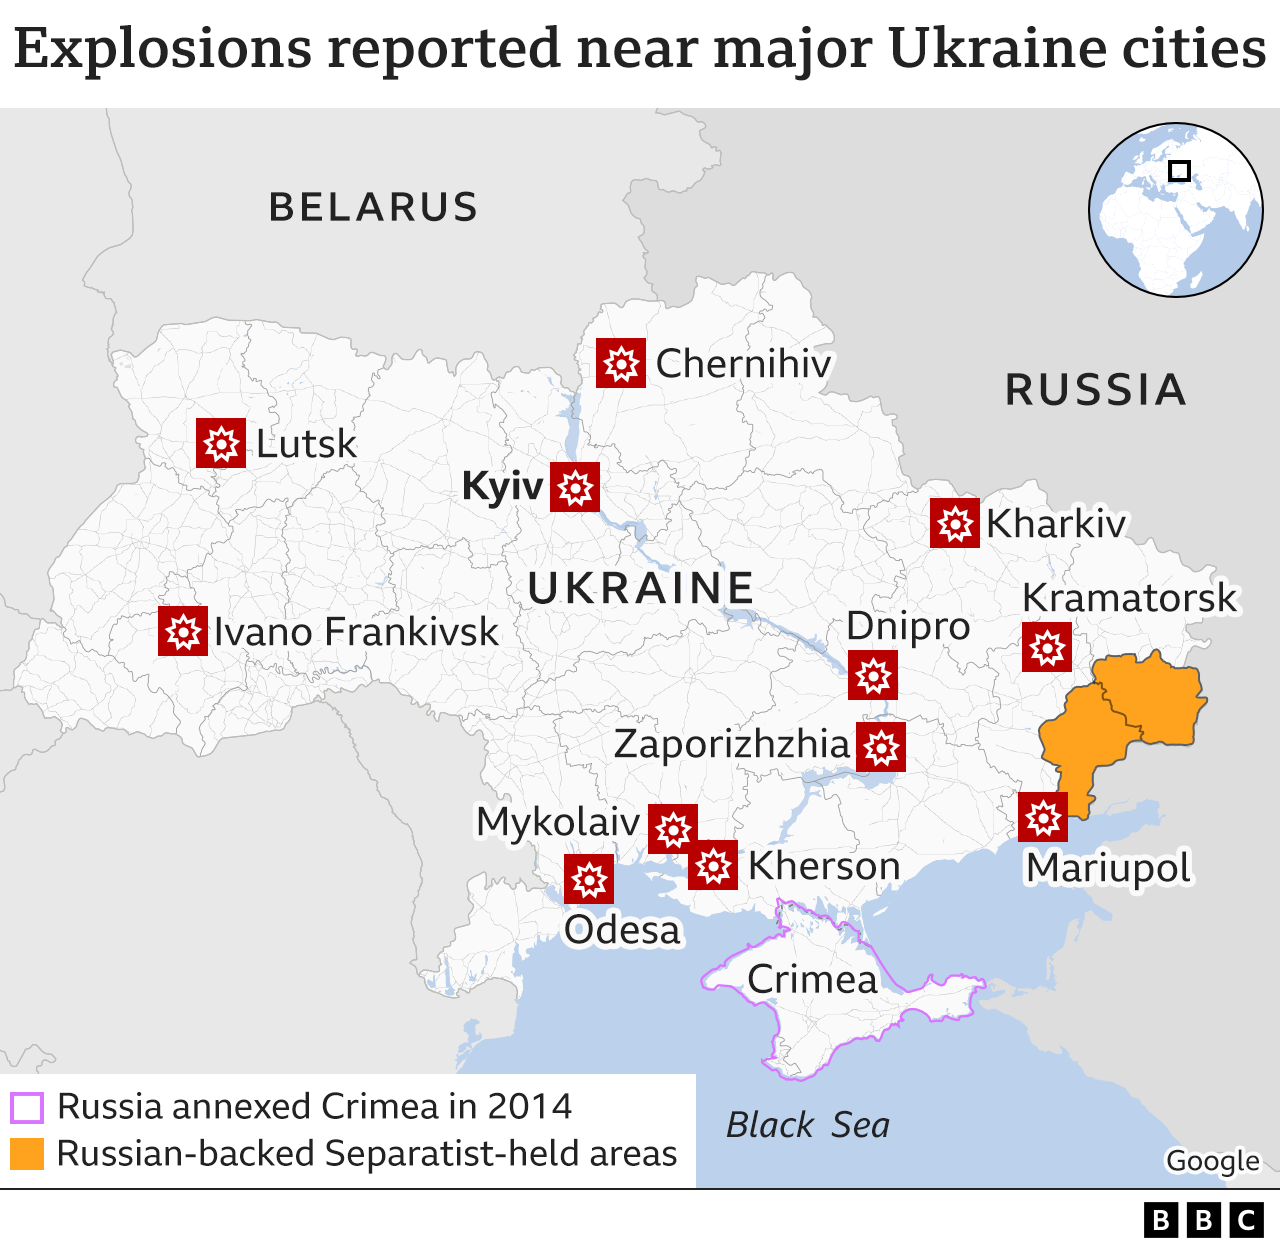 Why did russia invade ukraine